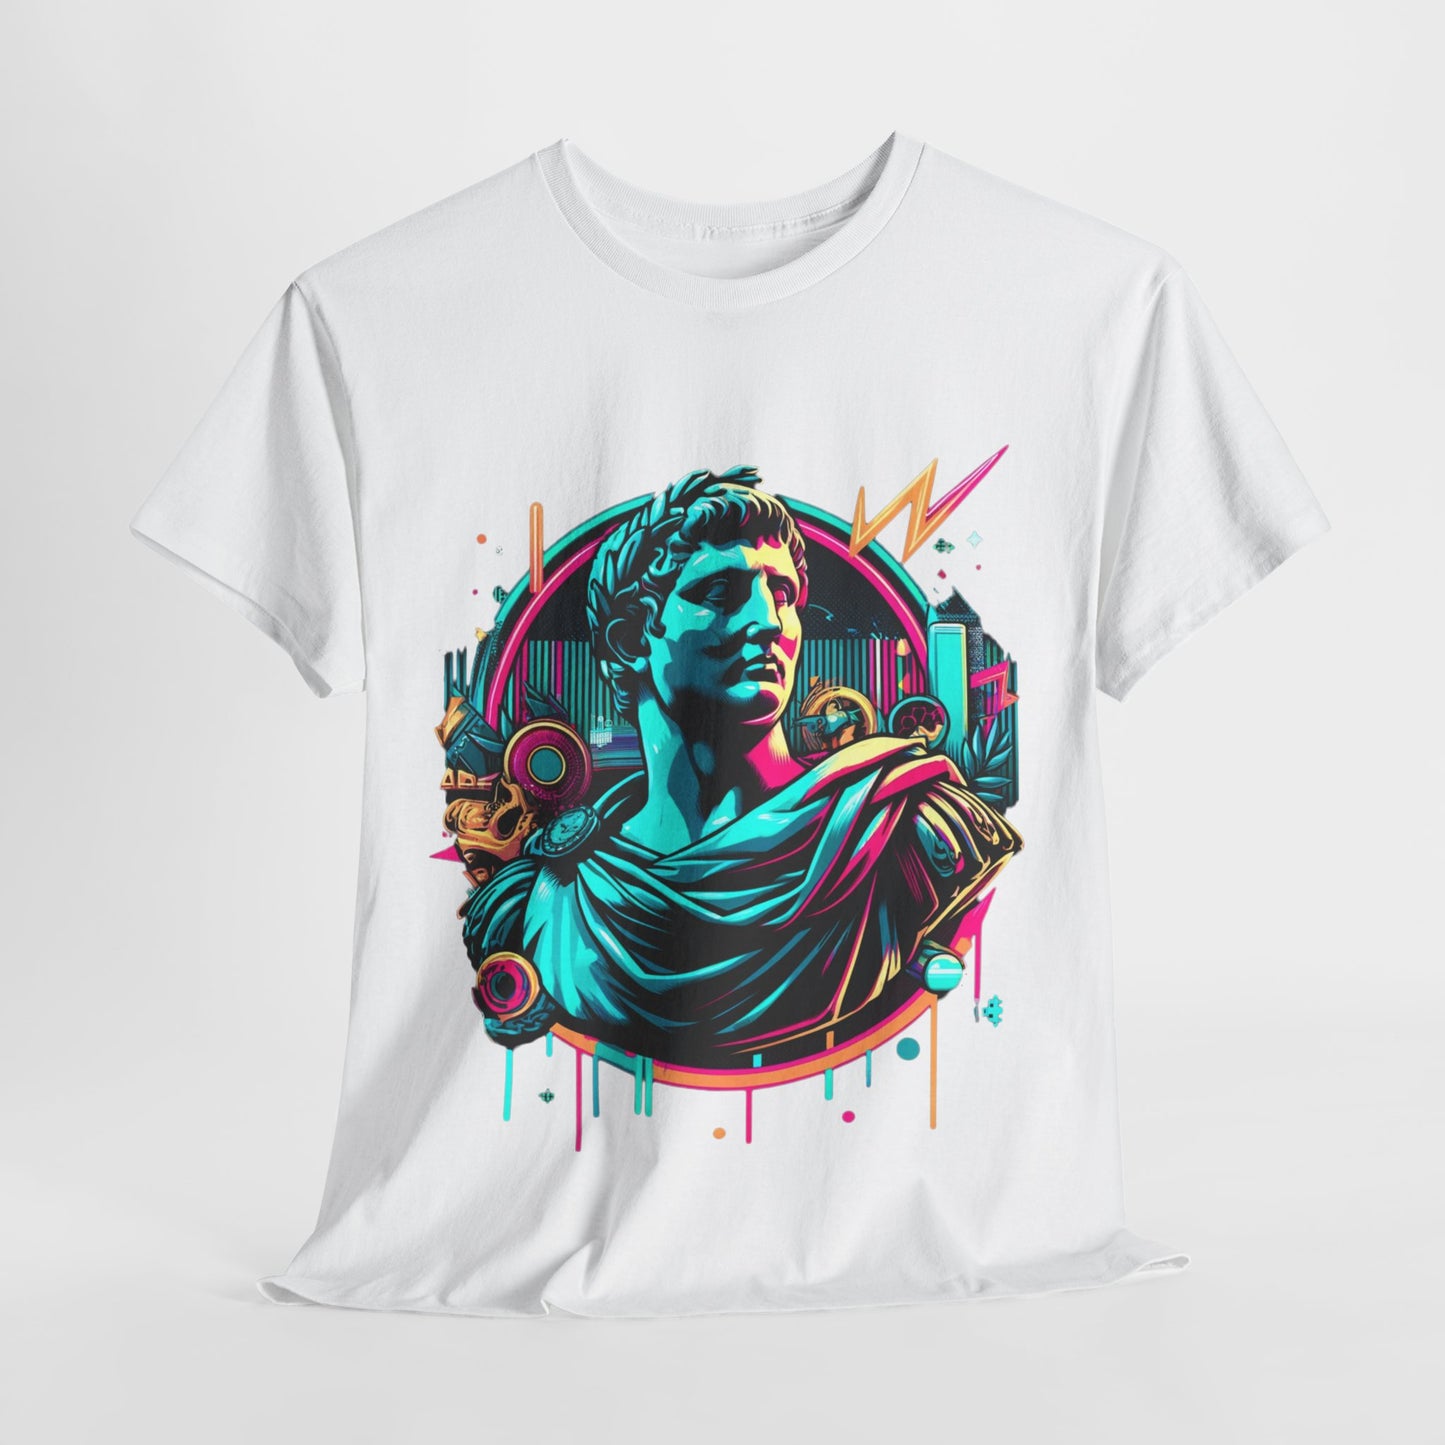 Y.M.L.Y. "Julius Caesar Throwback" T-Shirt Historical T-Shirts Unique T-Shirts Roman General T-Shirts